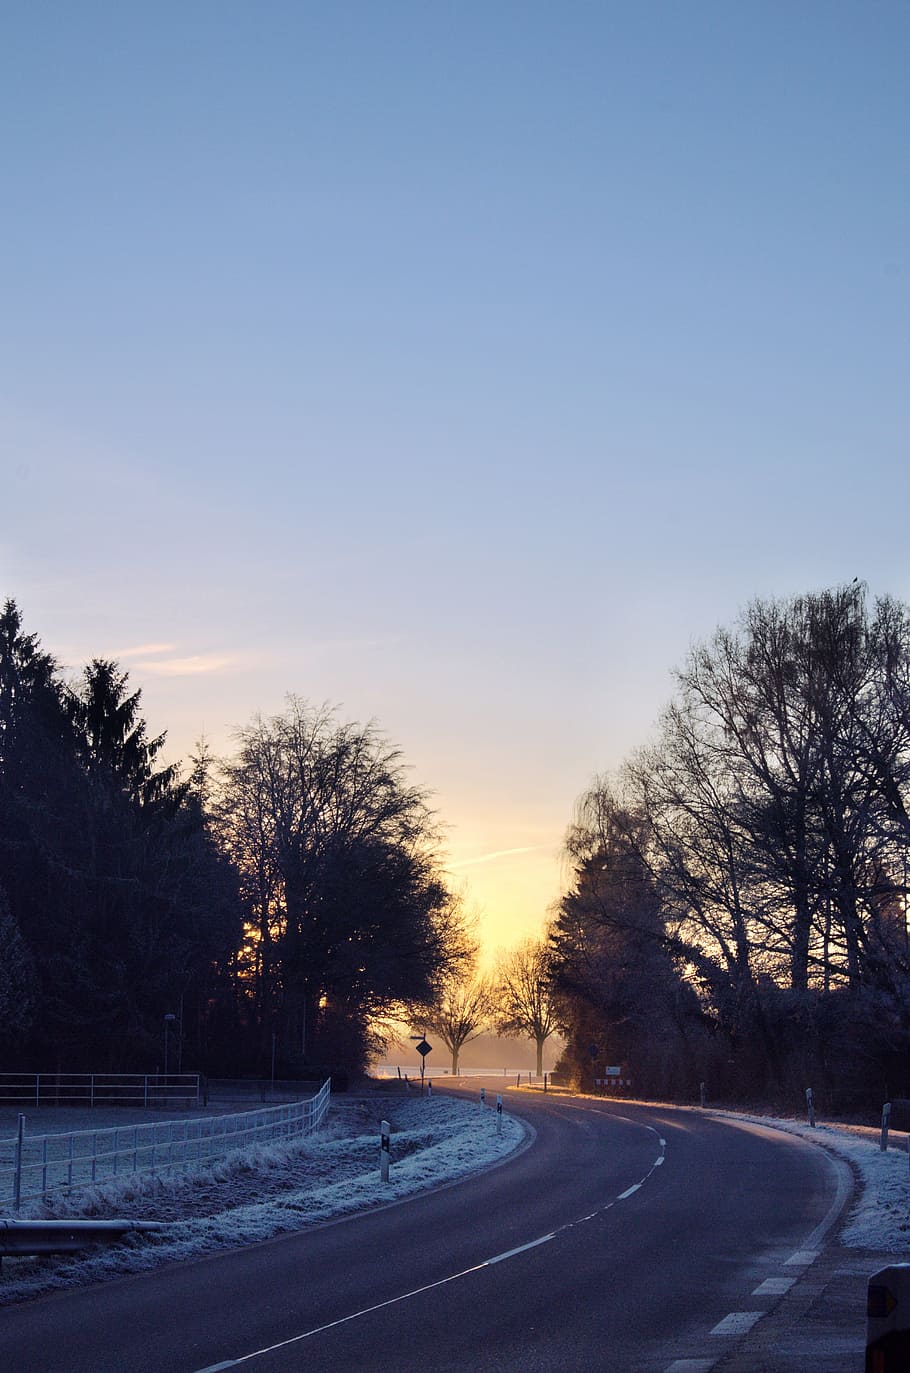 Road, Frozen, Morning, Sun, Winter, season, cold, ice, nature, landscape